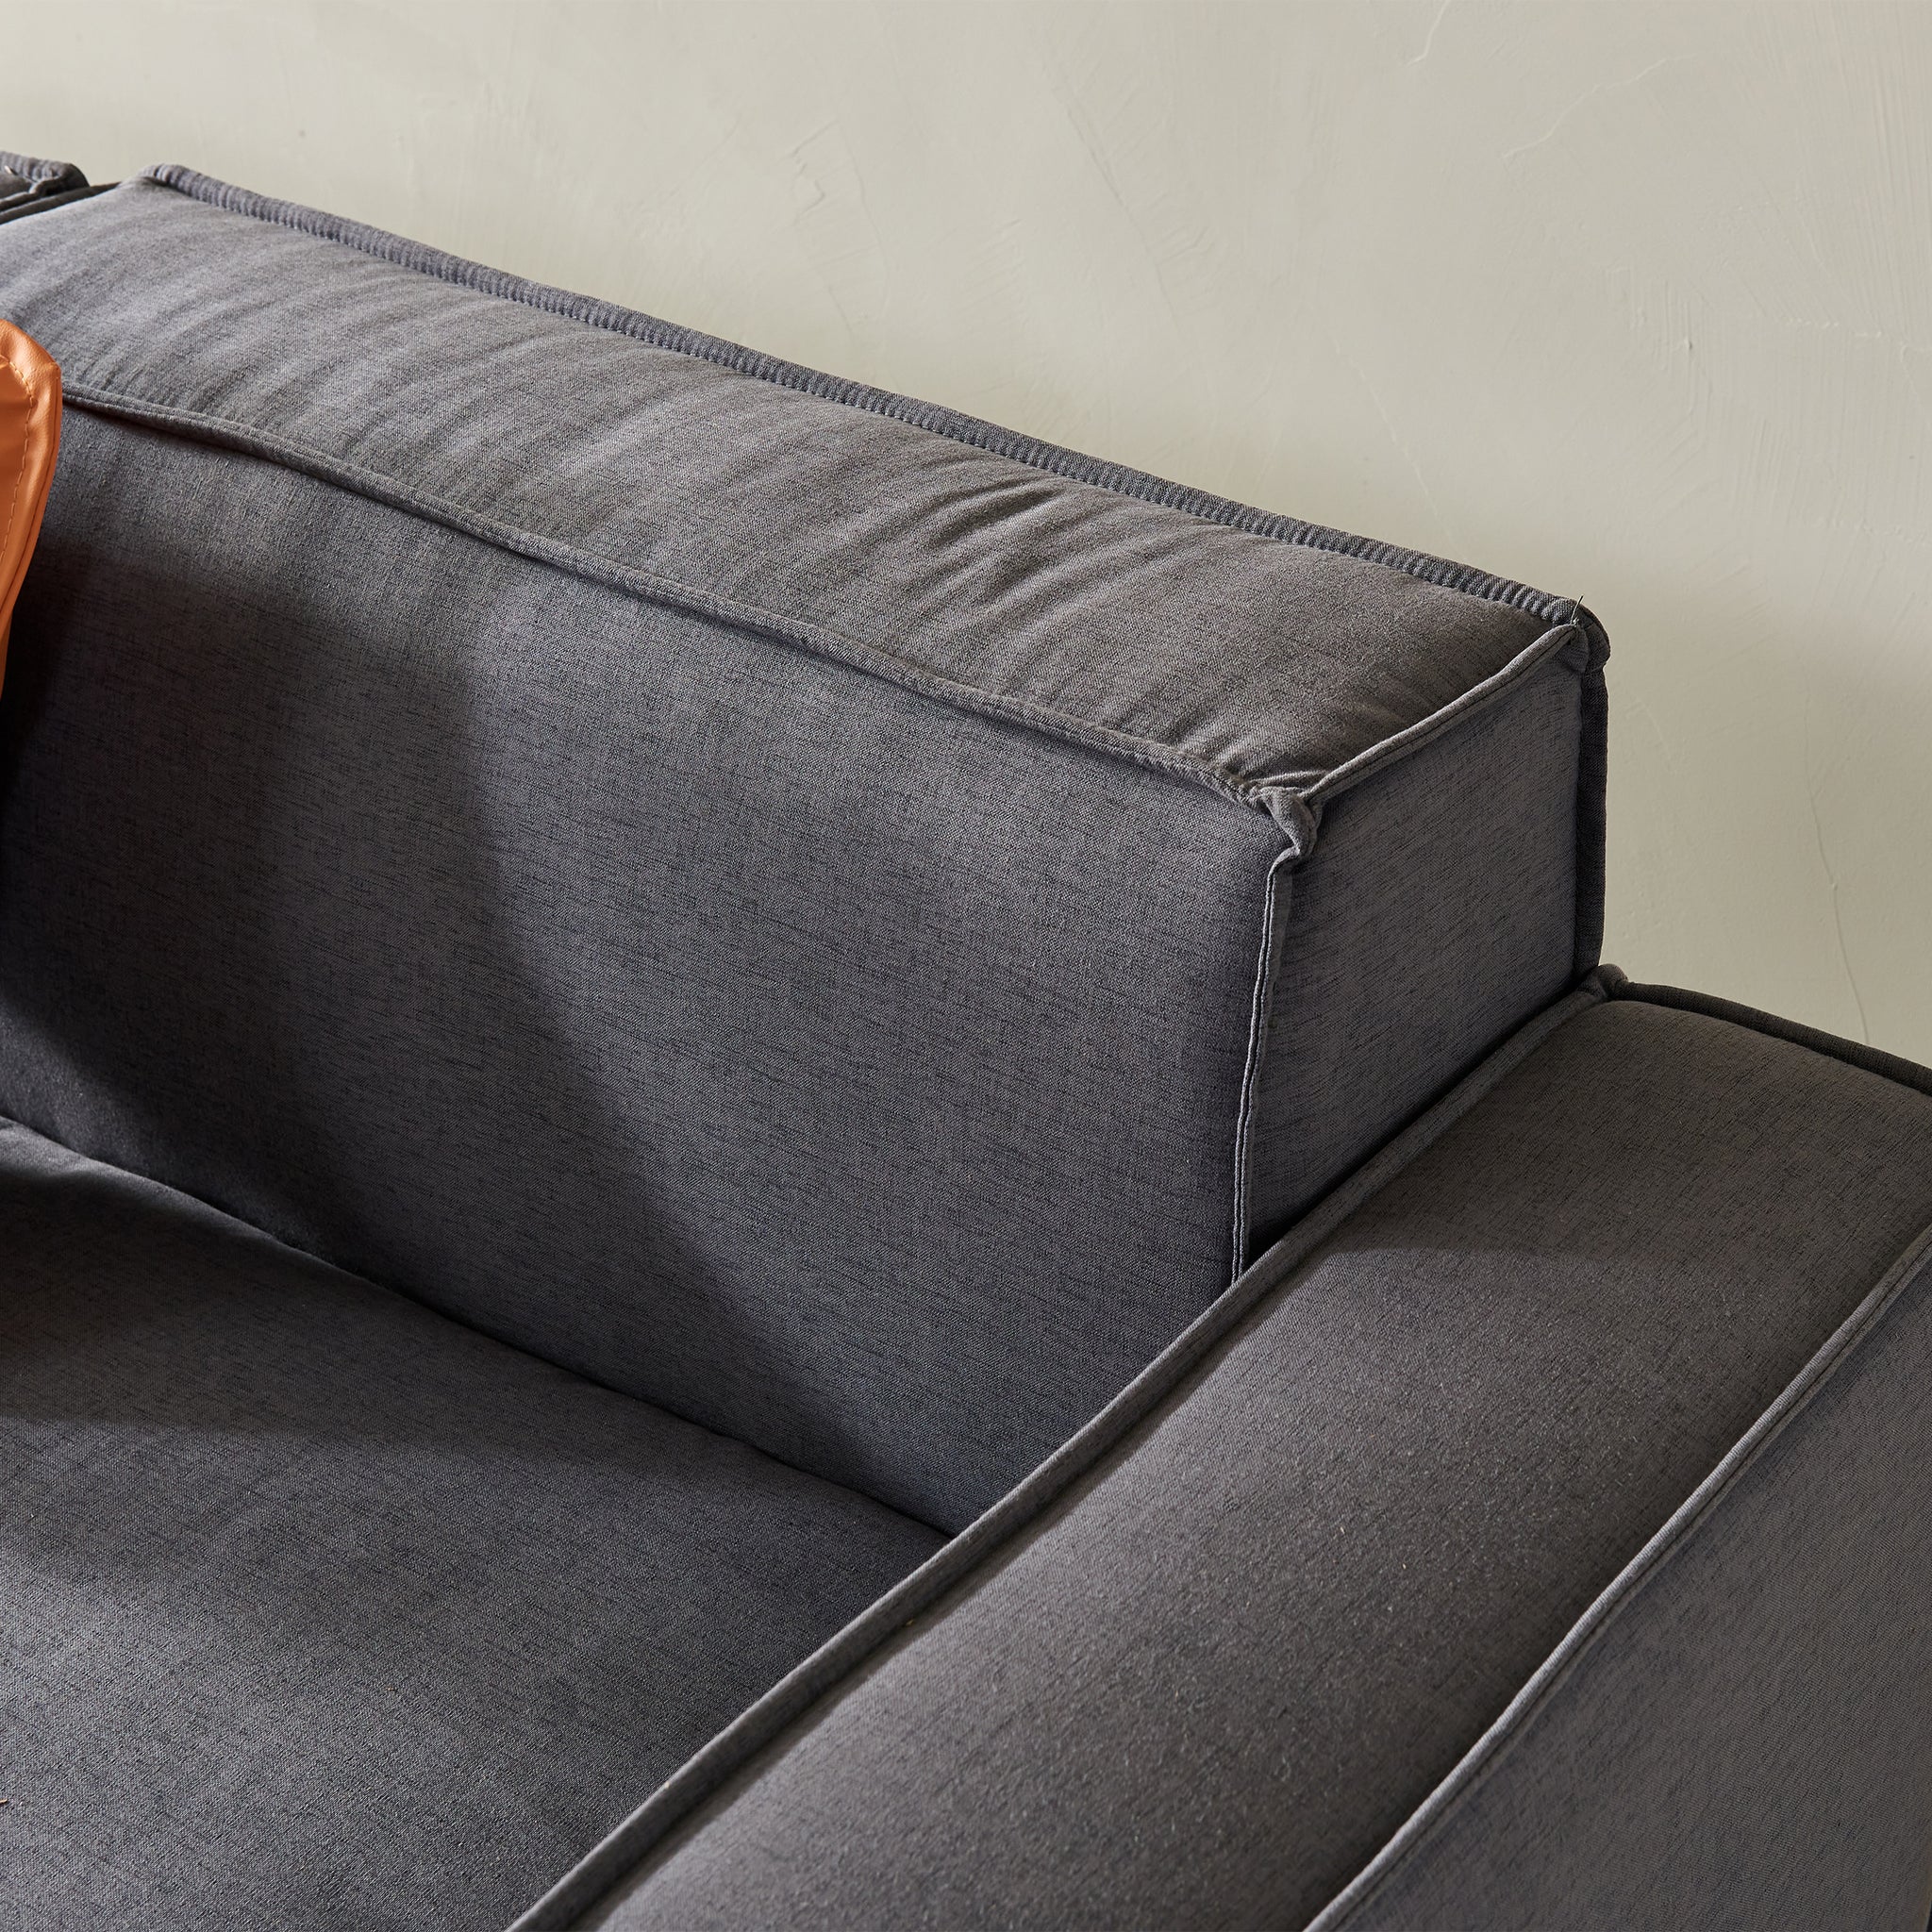 video Modular Sofa L Shape with Convertible Ottoman dark grey-foam-fabric